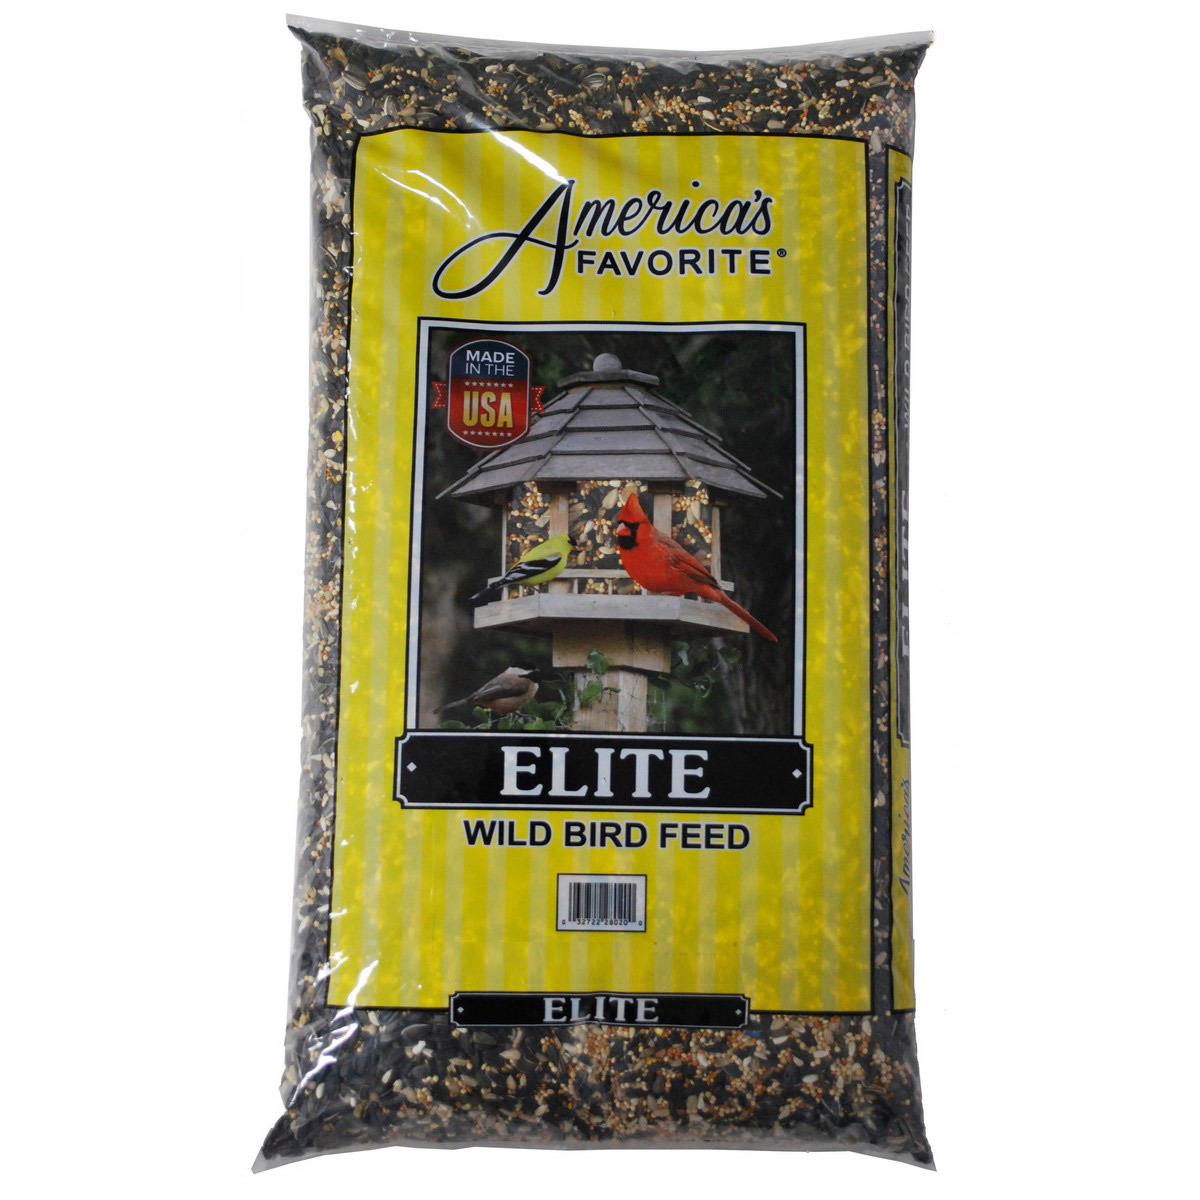 Picture of Americas Favorite 2800220 40 lbs Elite Wild Bird Feed Yellow Stripe Bag